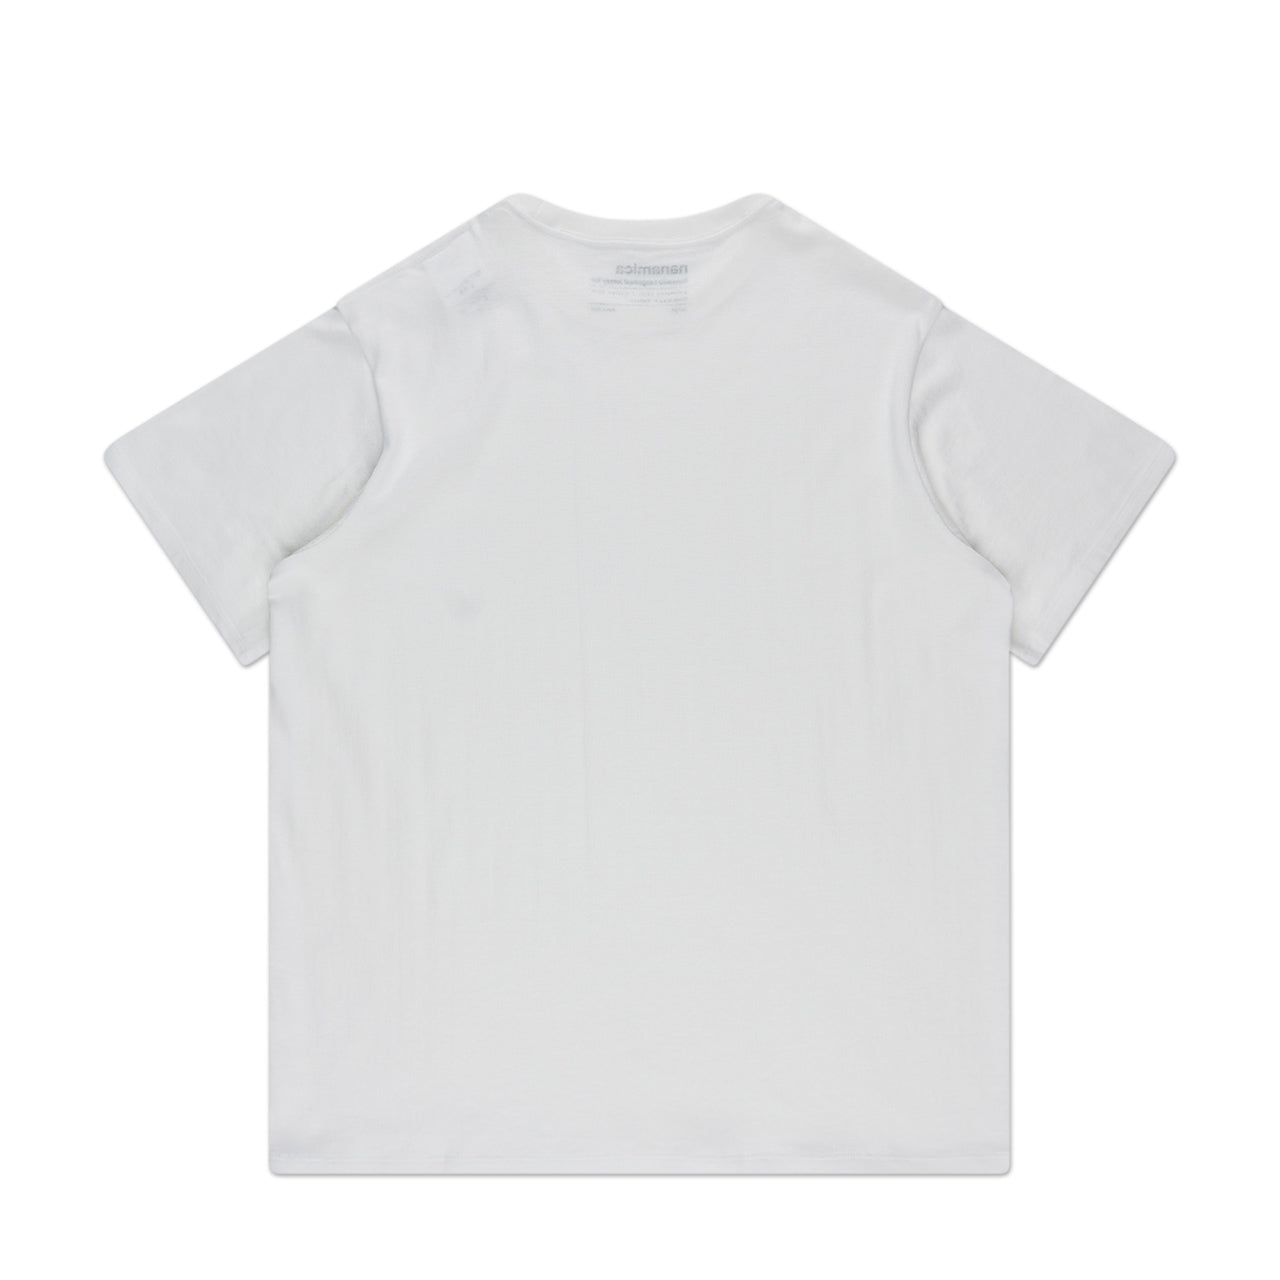 nanamica loopwheel coolmax jersey t-shirt (weiß)